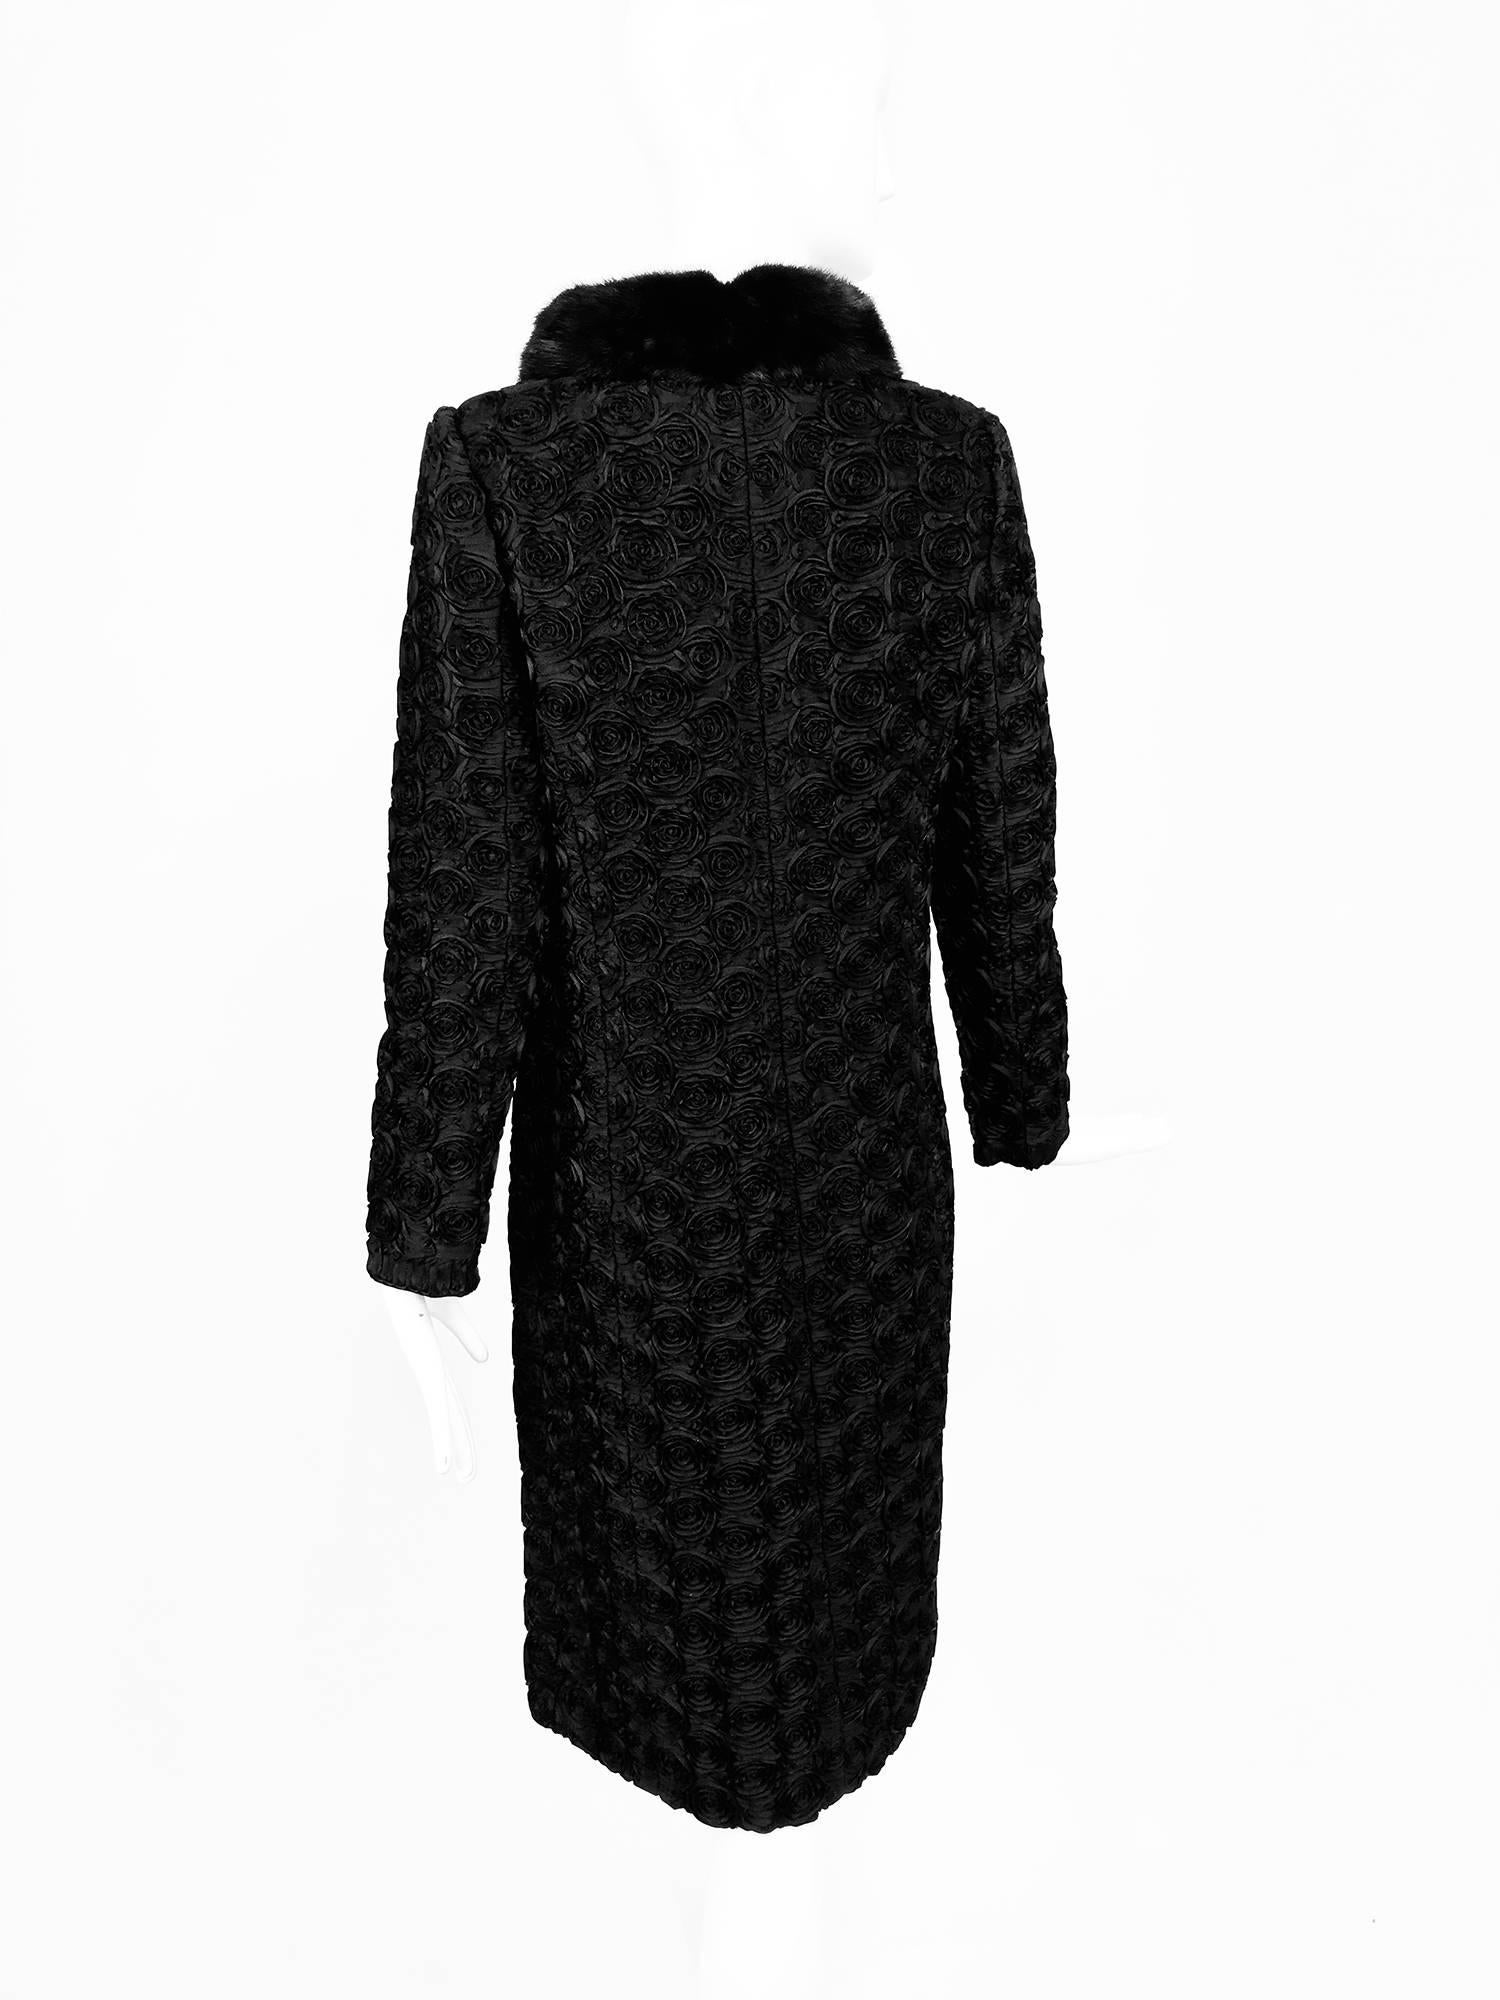 Valentino Black Silk Faille Appliqued Coat Mink Collar  For Sale 4